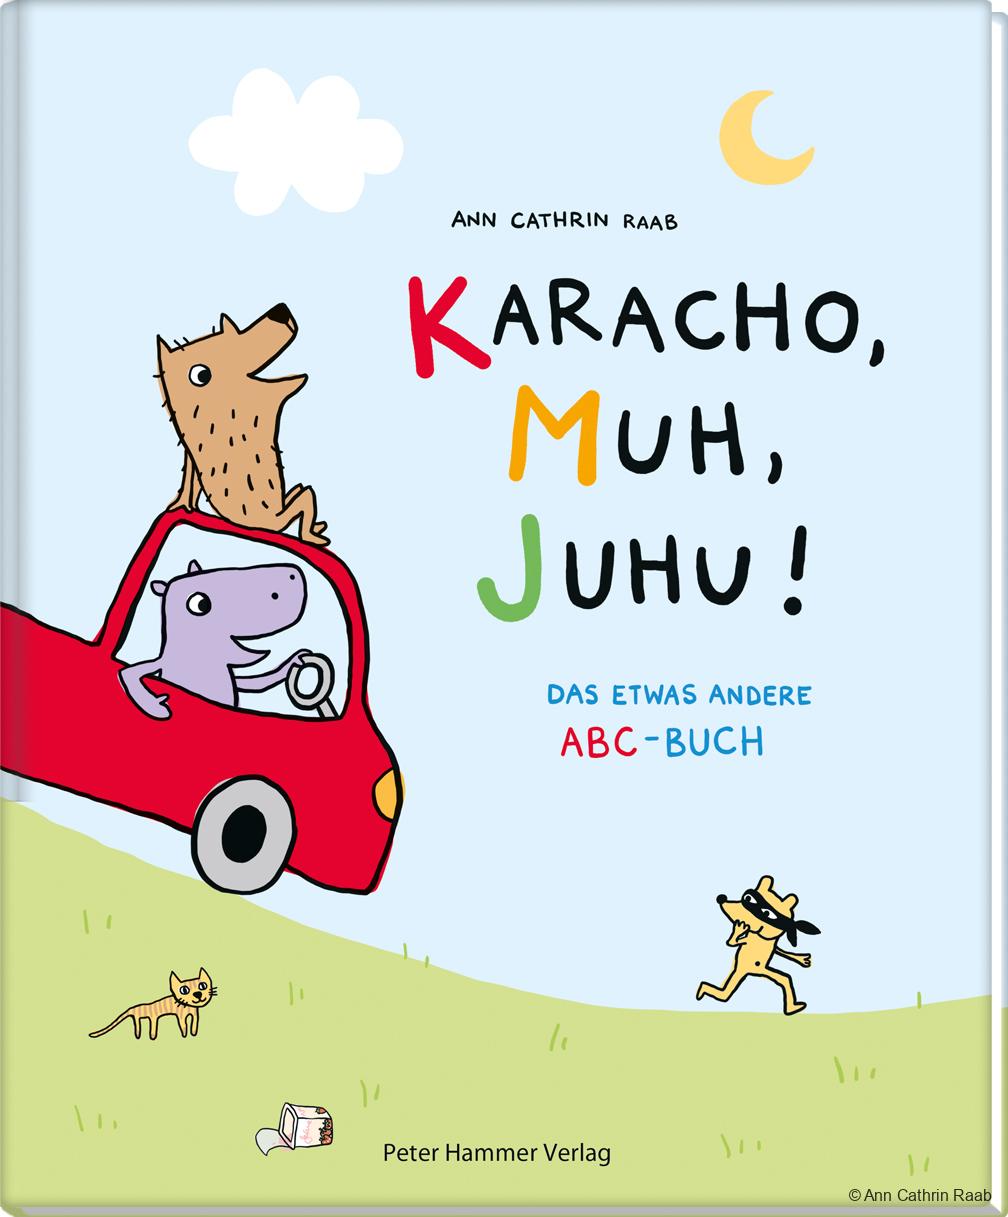 Karacho, Muh, Juhu! – Das etwas andere ABC-Buch